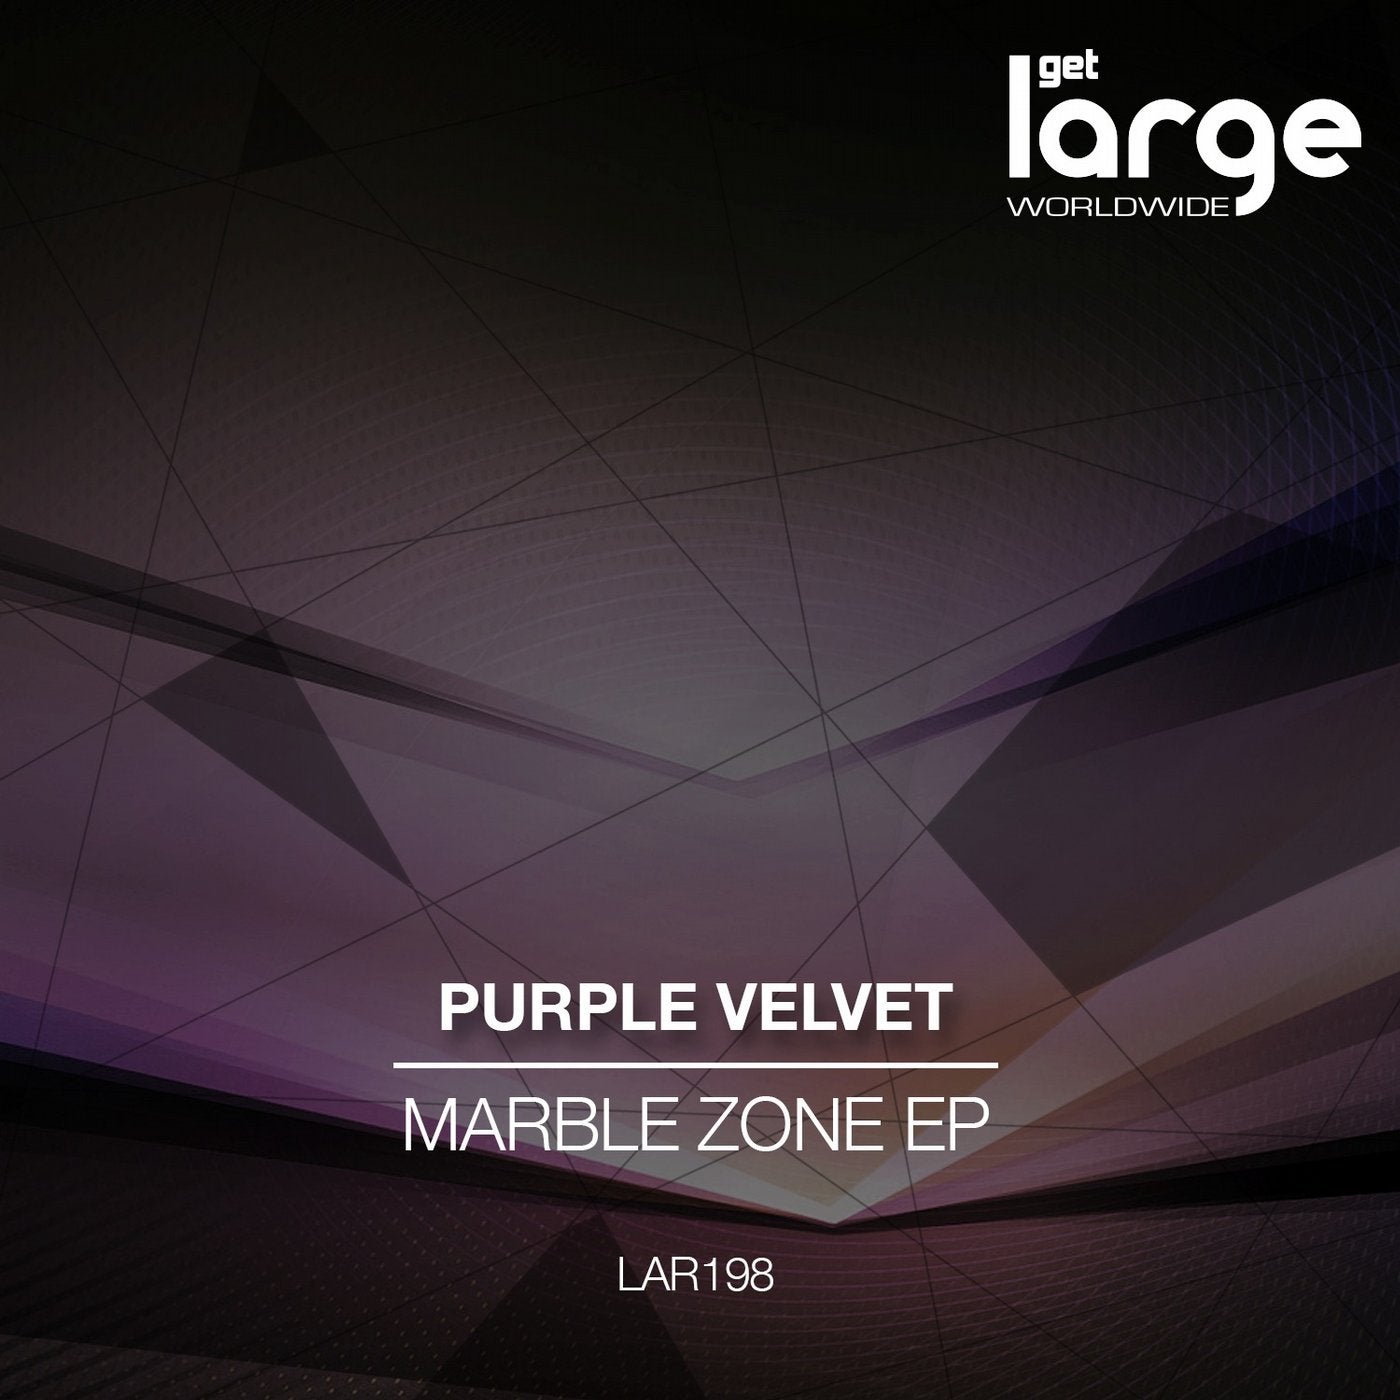 Marble Zone EP